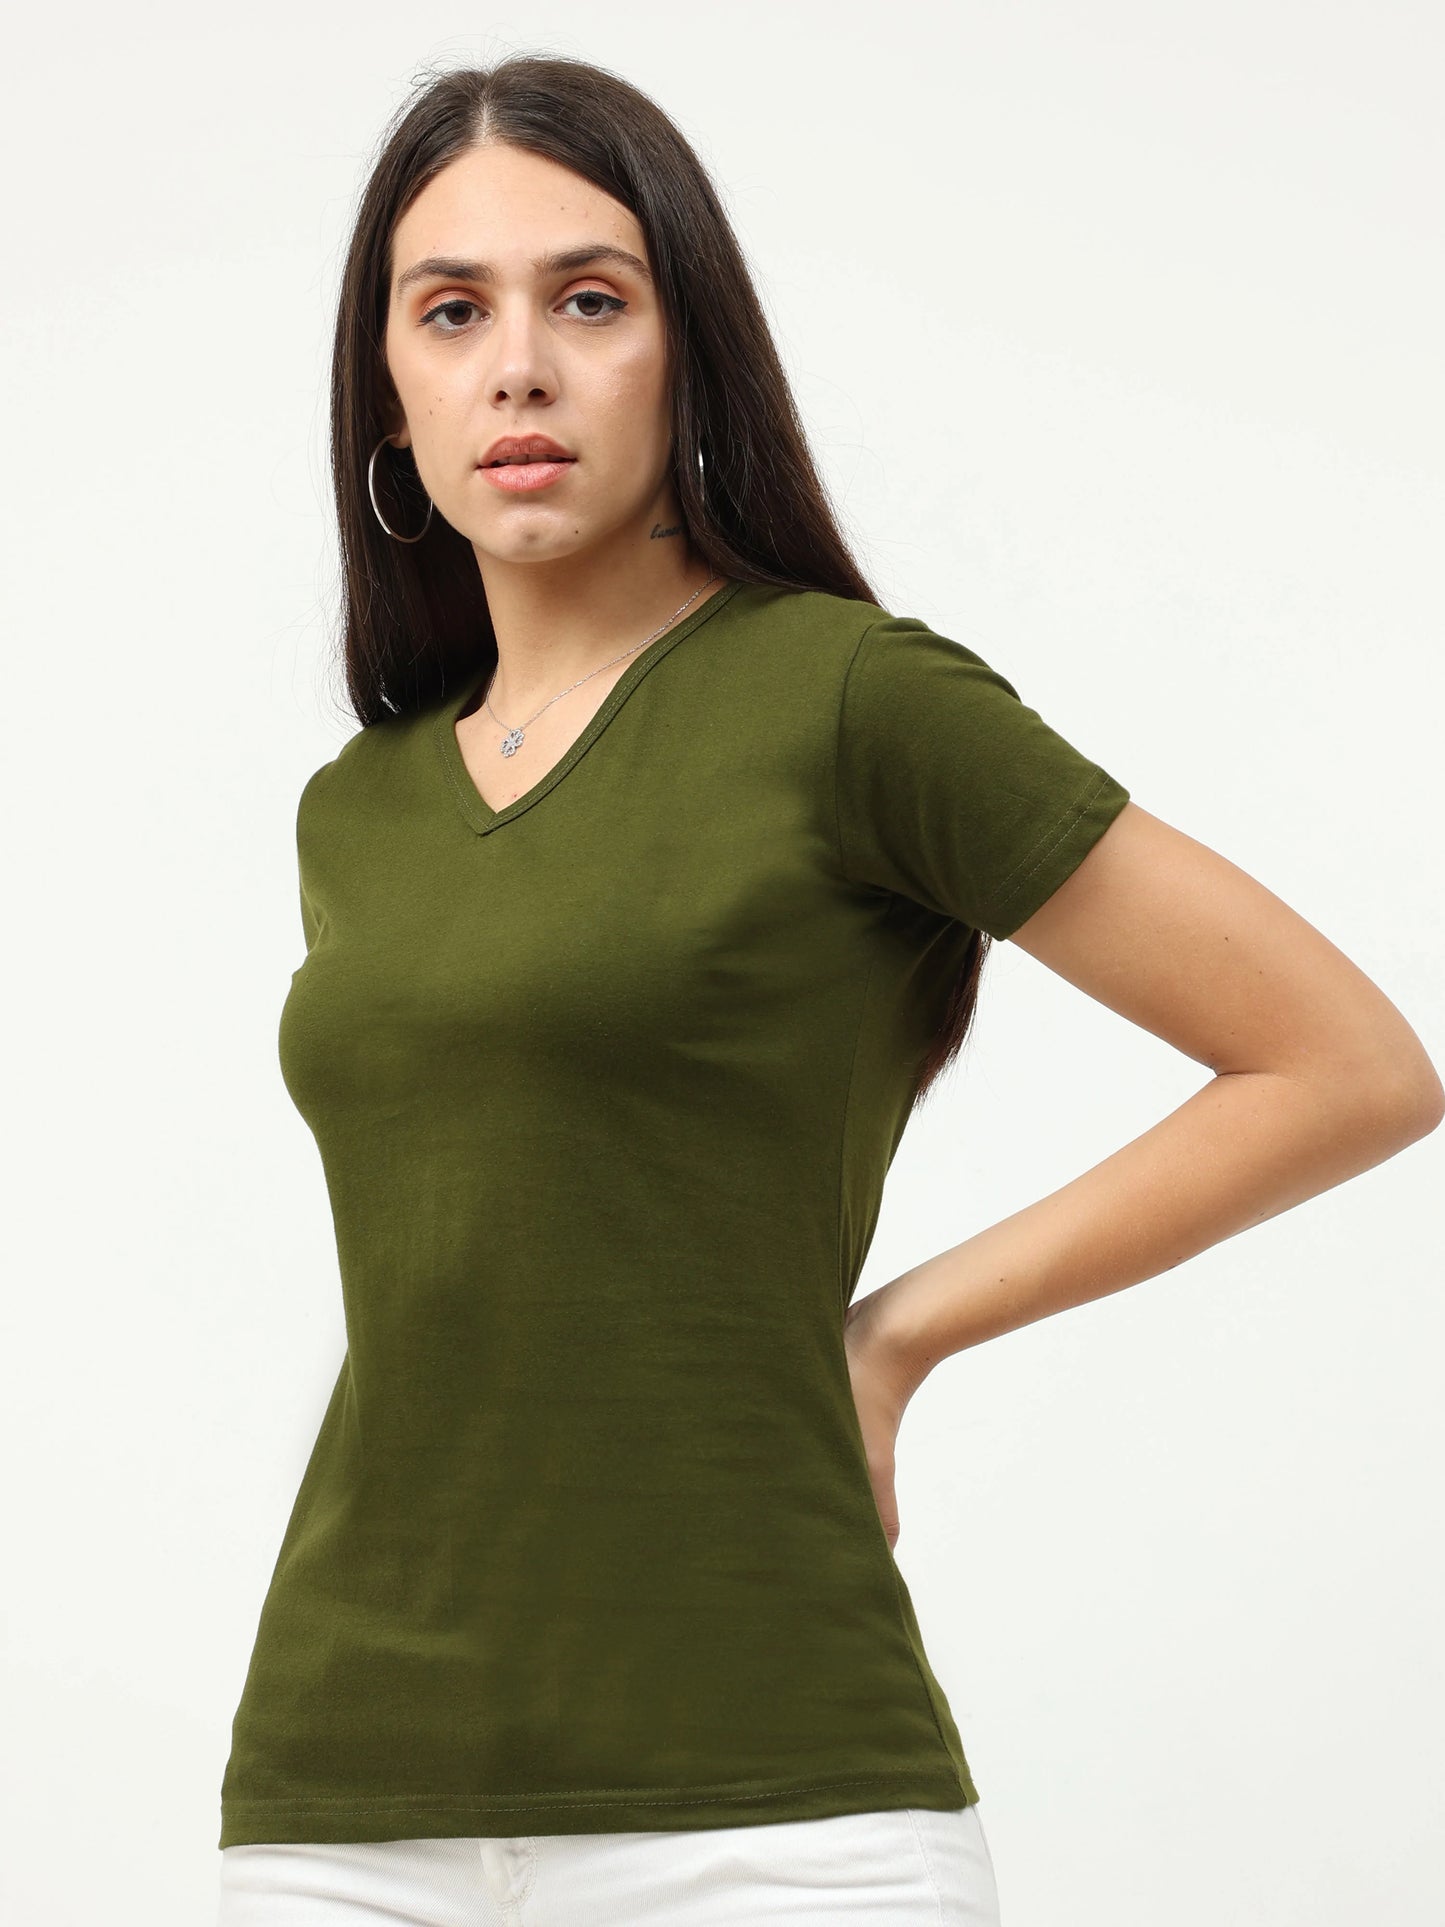 Women's Cotton Plain V Neck Half Sleeve Olive Green Color T-Shirt